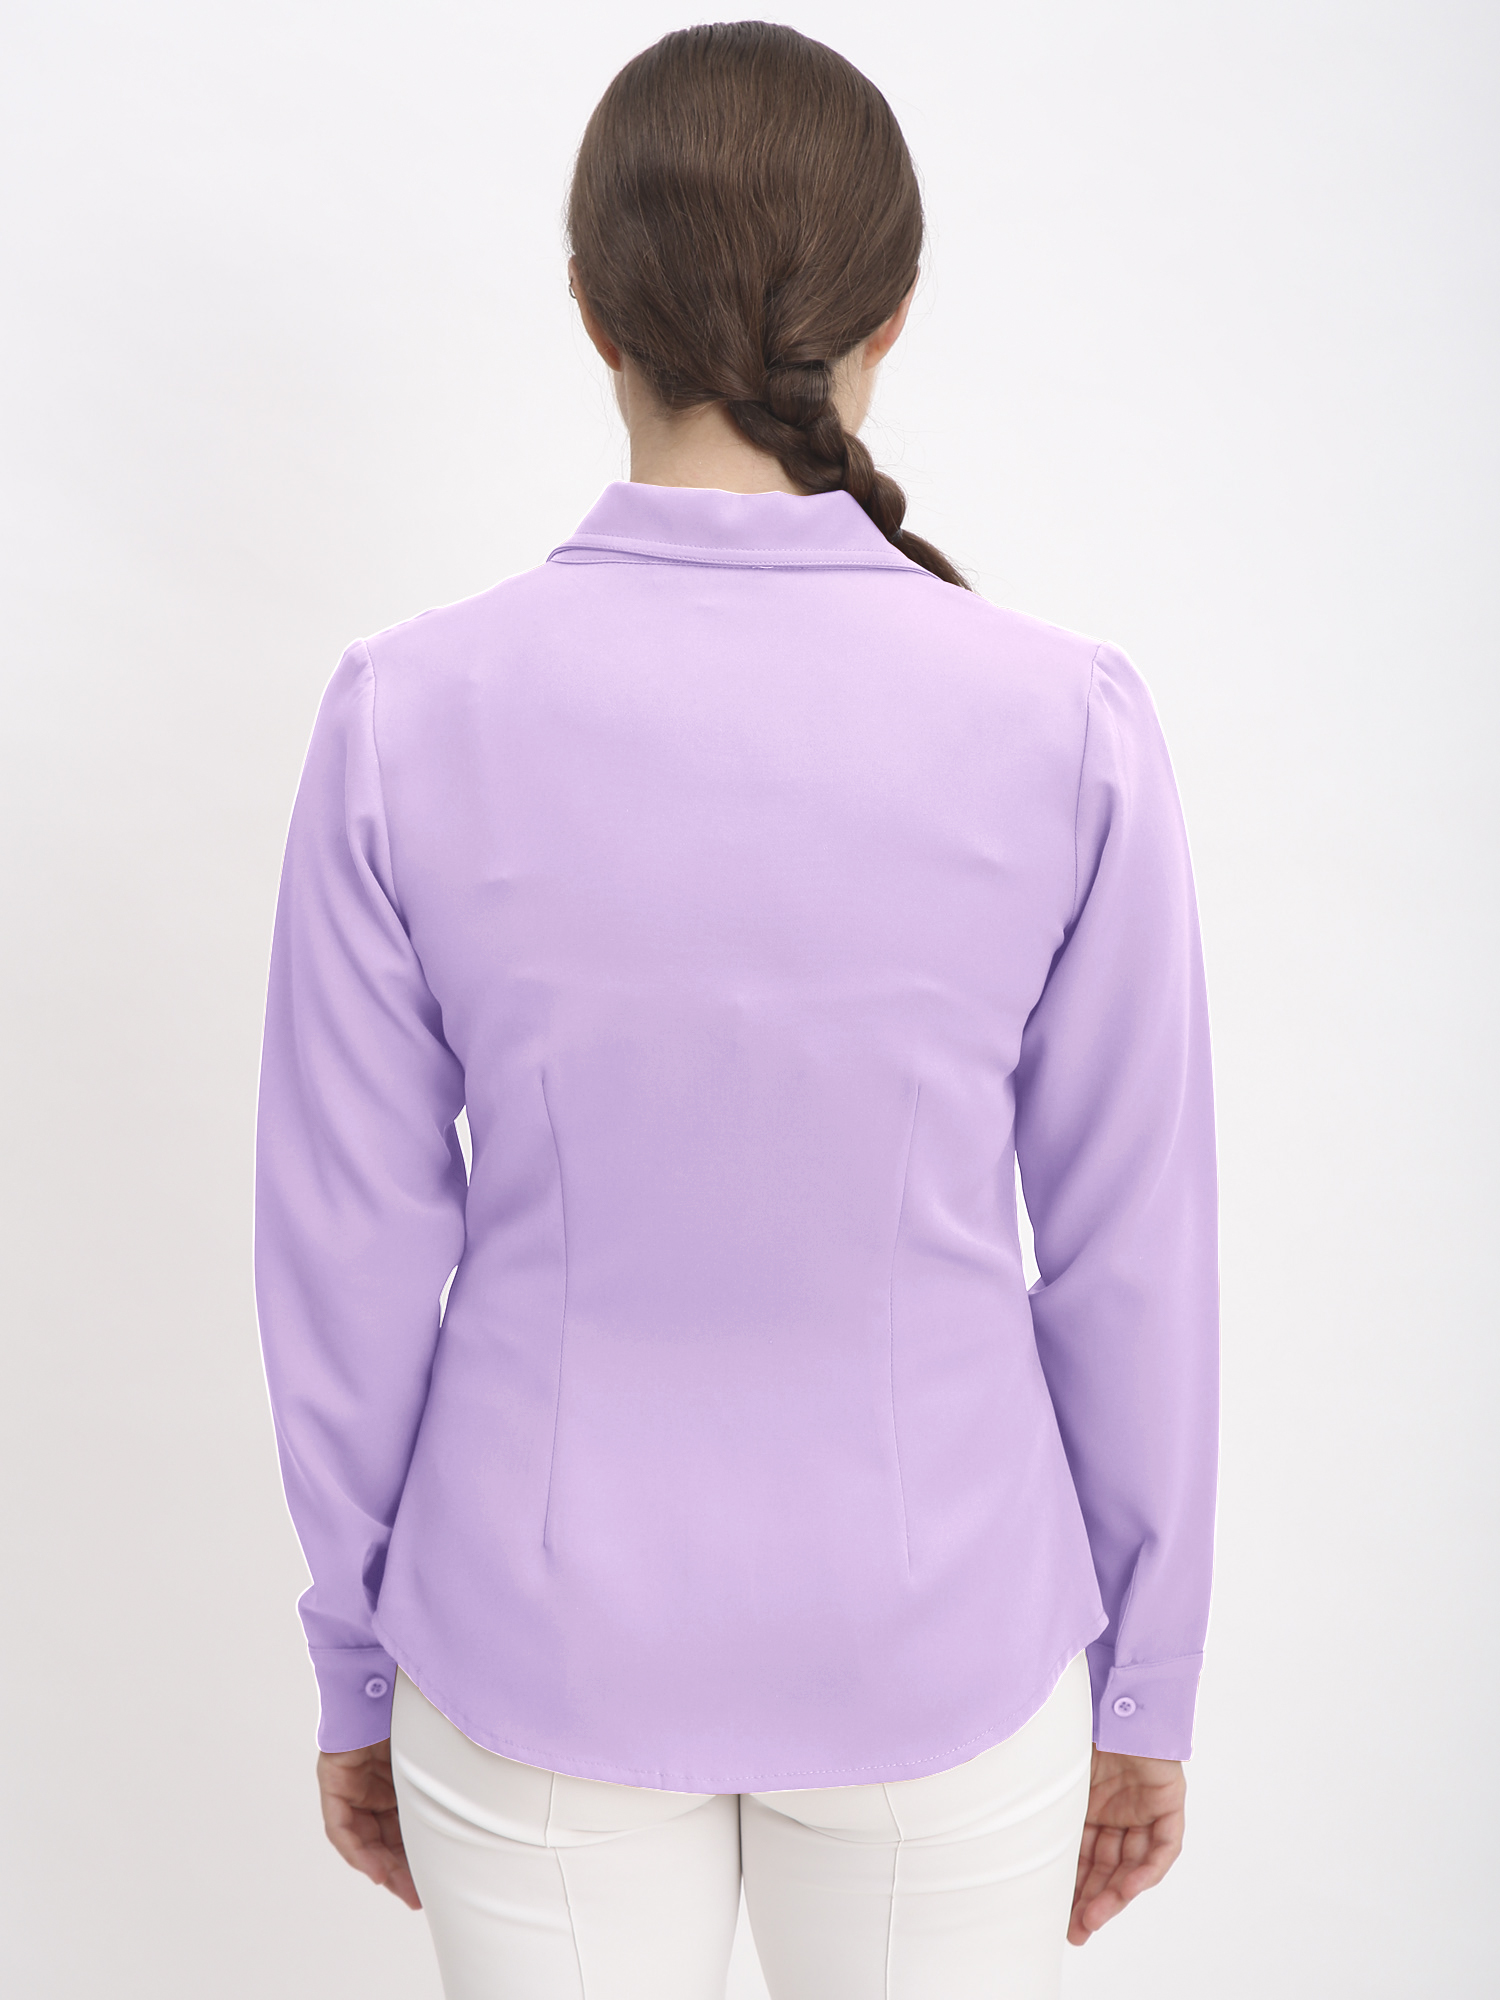 Basic Office Shirt Lavender - Back